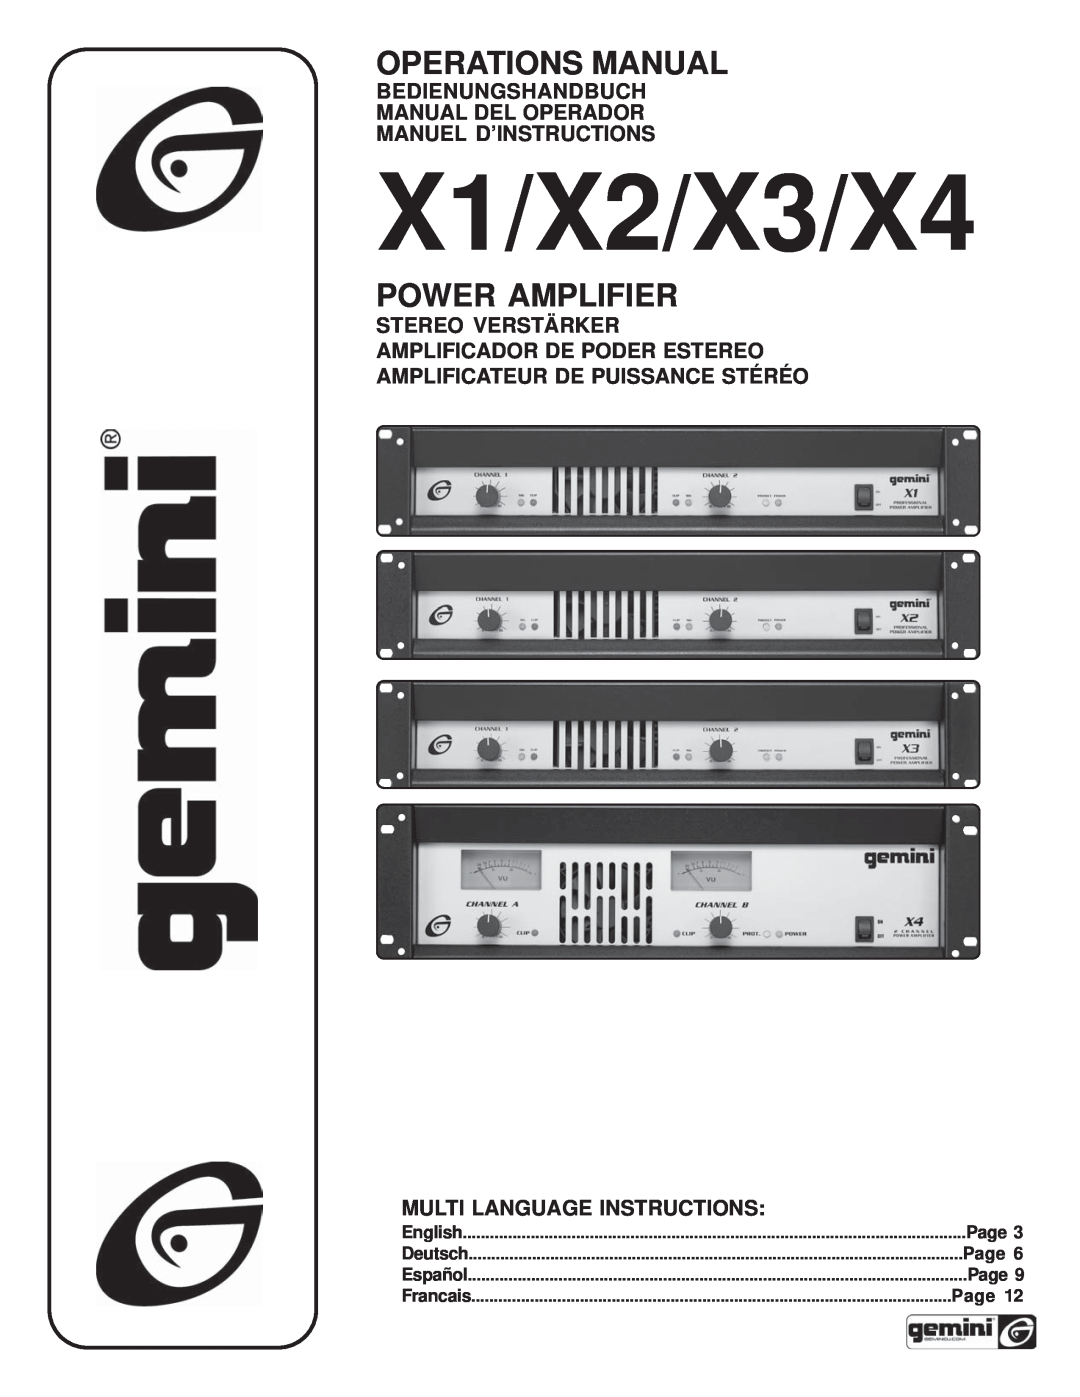 Gemini X4, X3, X2 manual Bedienungshandbuch Manual Del Operador, Manuel D’Instructions, Amplificateur De Puissance Stéréo 